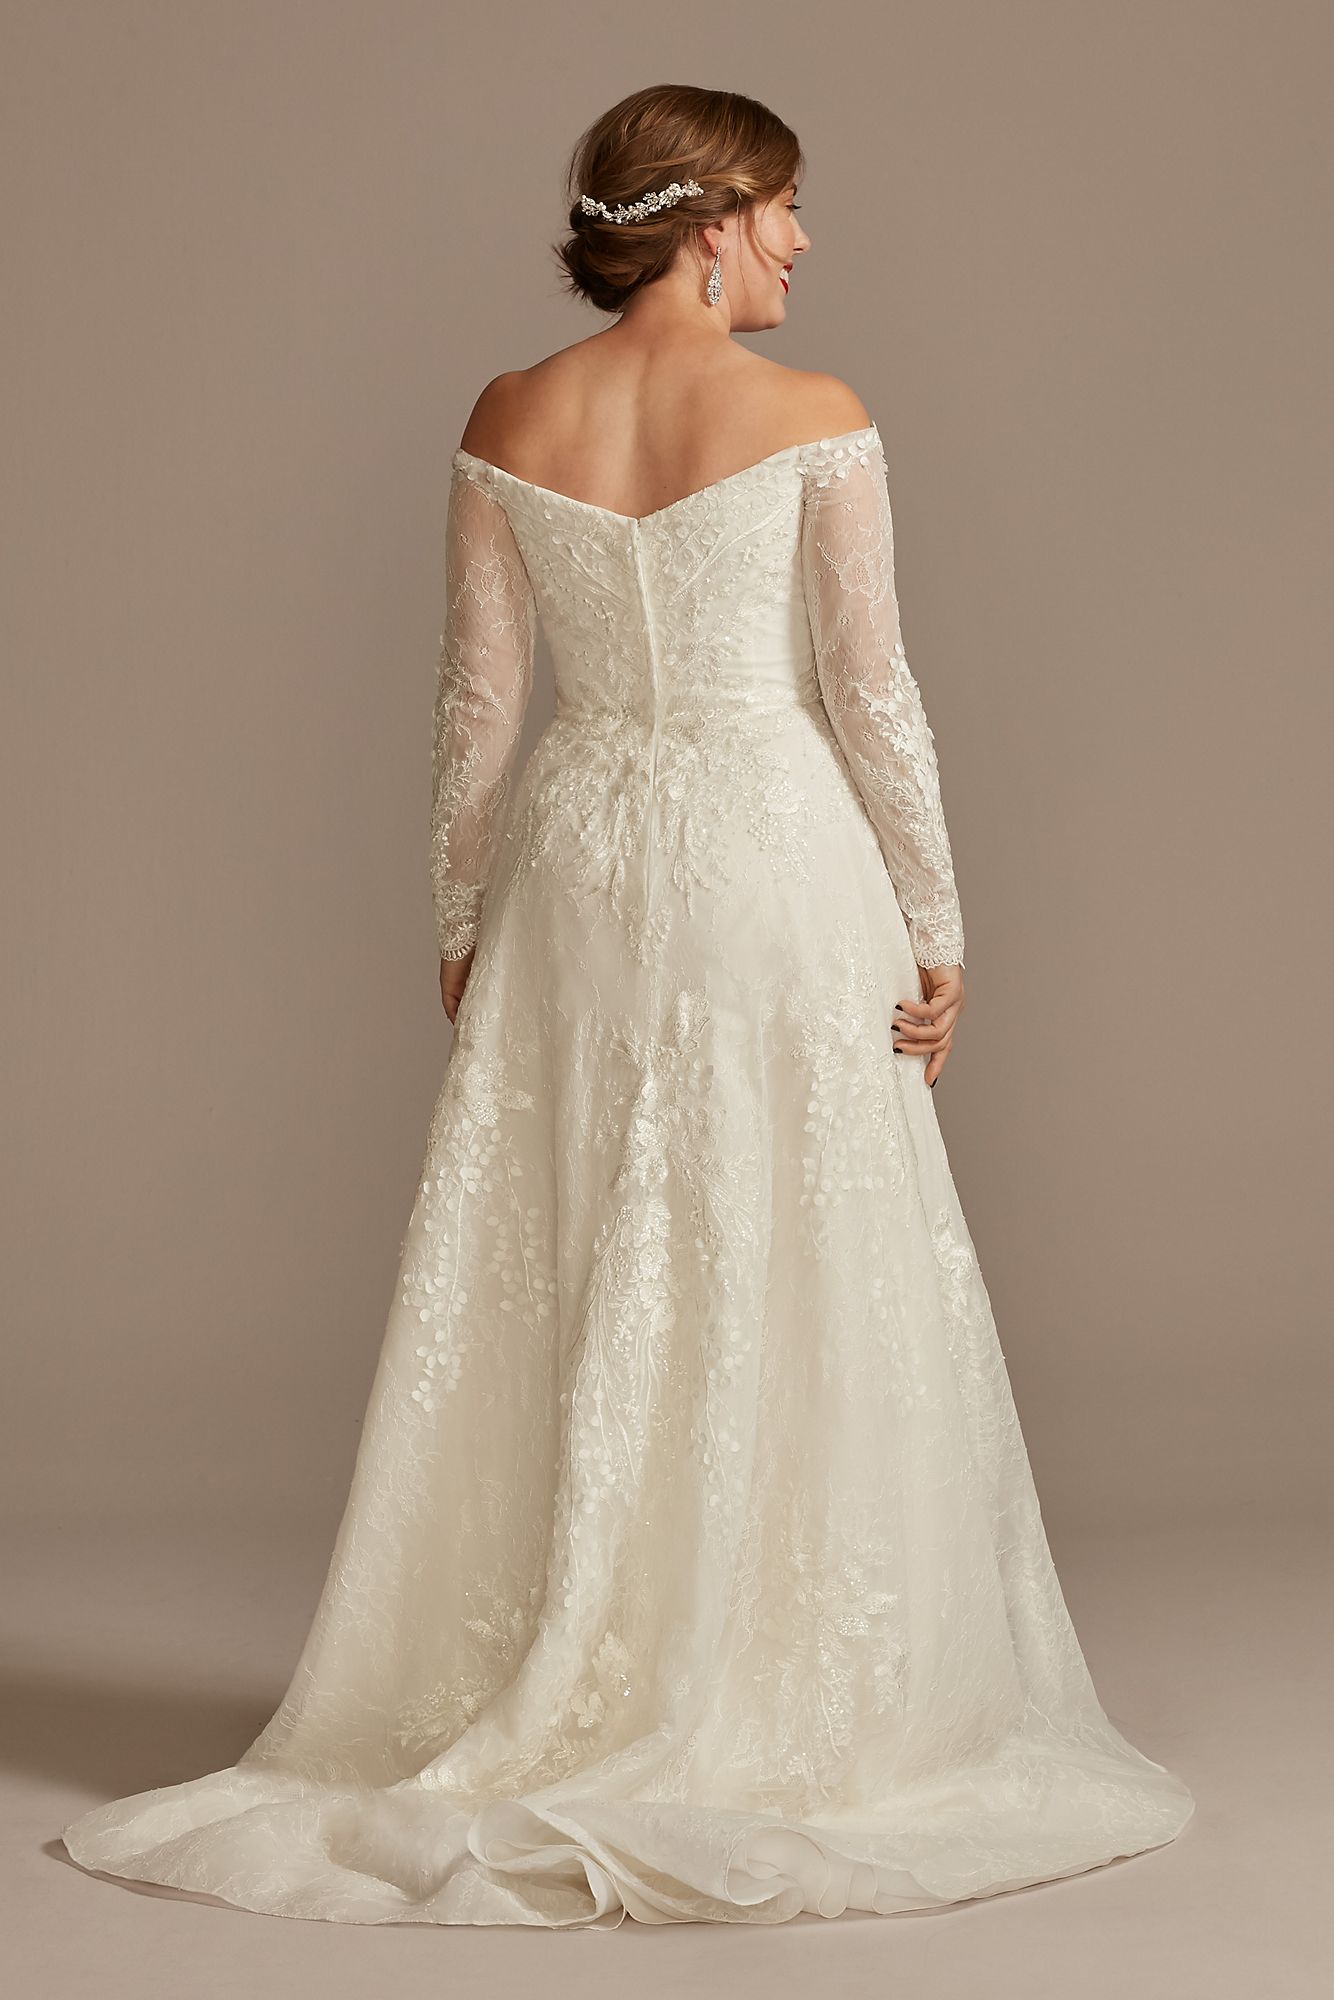 Leafy Applique Lace Off the Shoulder Wedding Dress Oleg Cassini CWG891